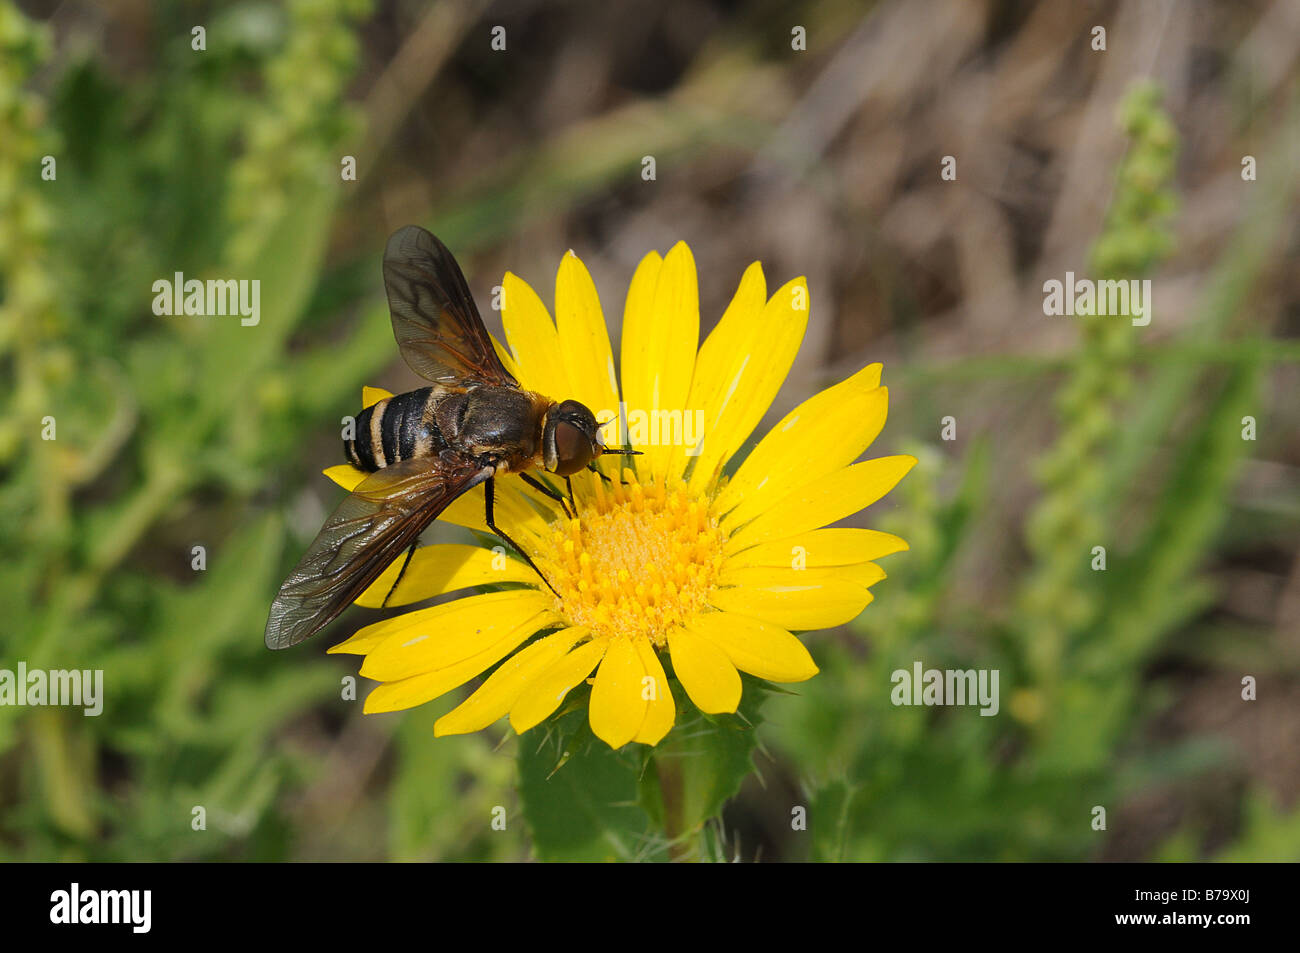 Progresivo mosca abeja alimentándose de una hoja de sierra Daisy wildflower Foto de stock